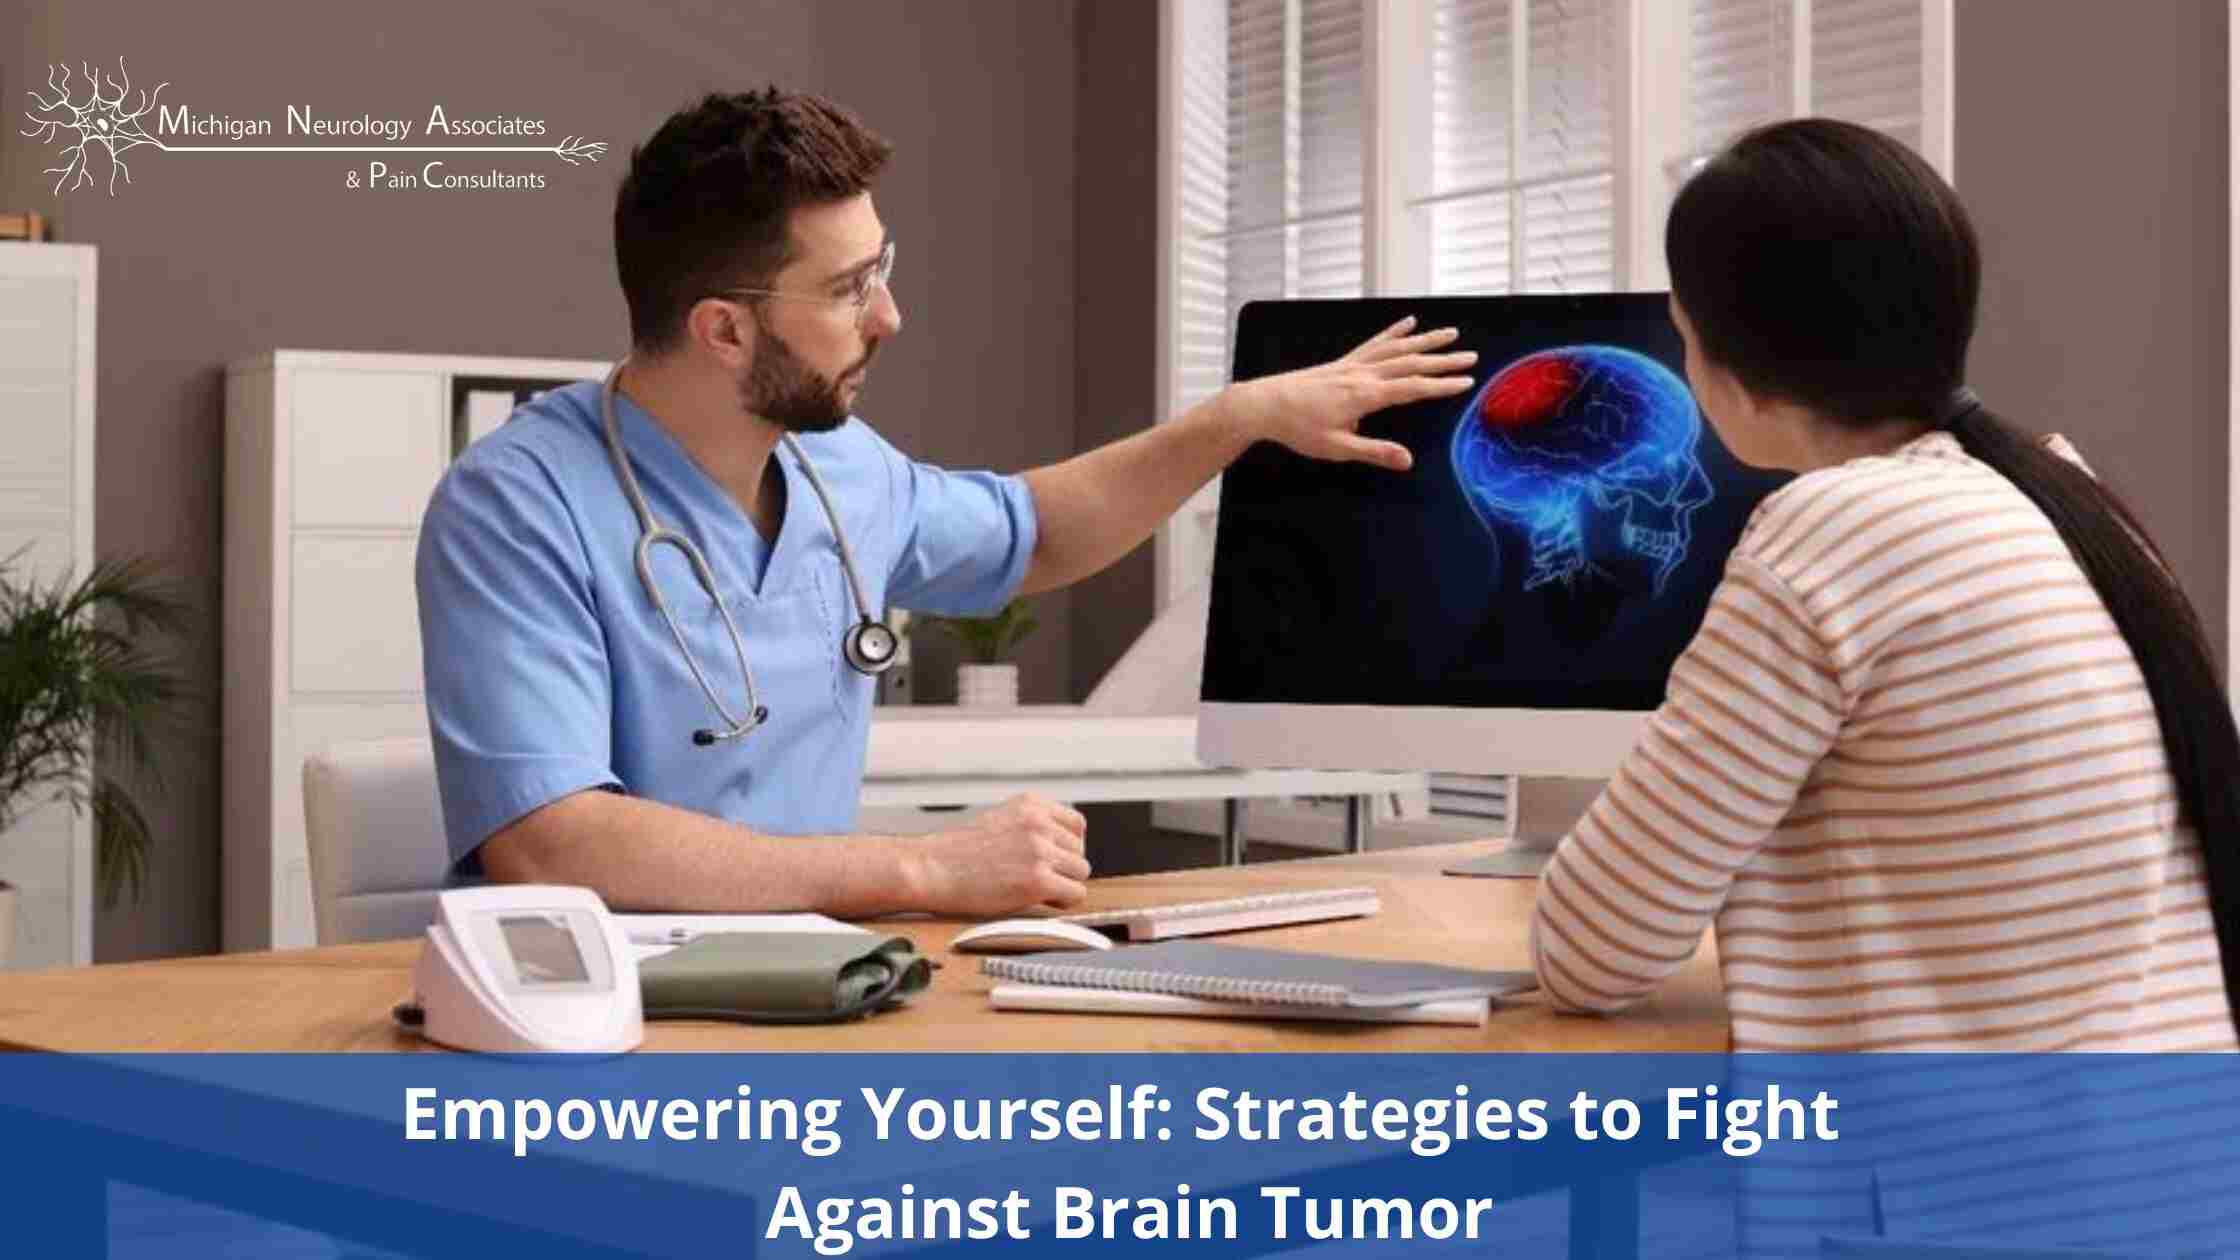 Strategies to Fight Against Brain Tumor